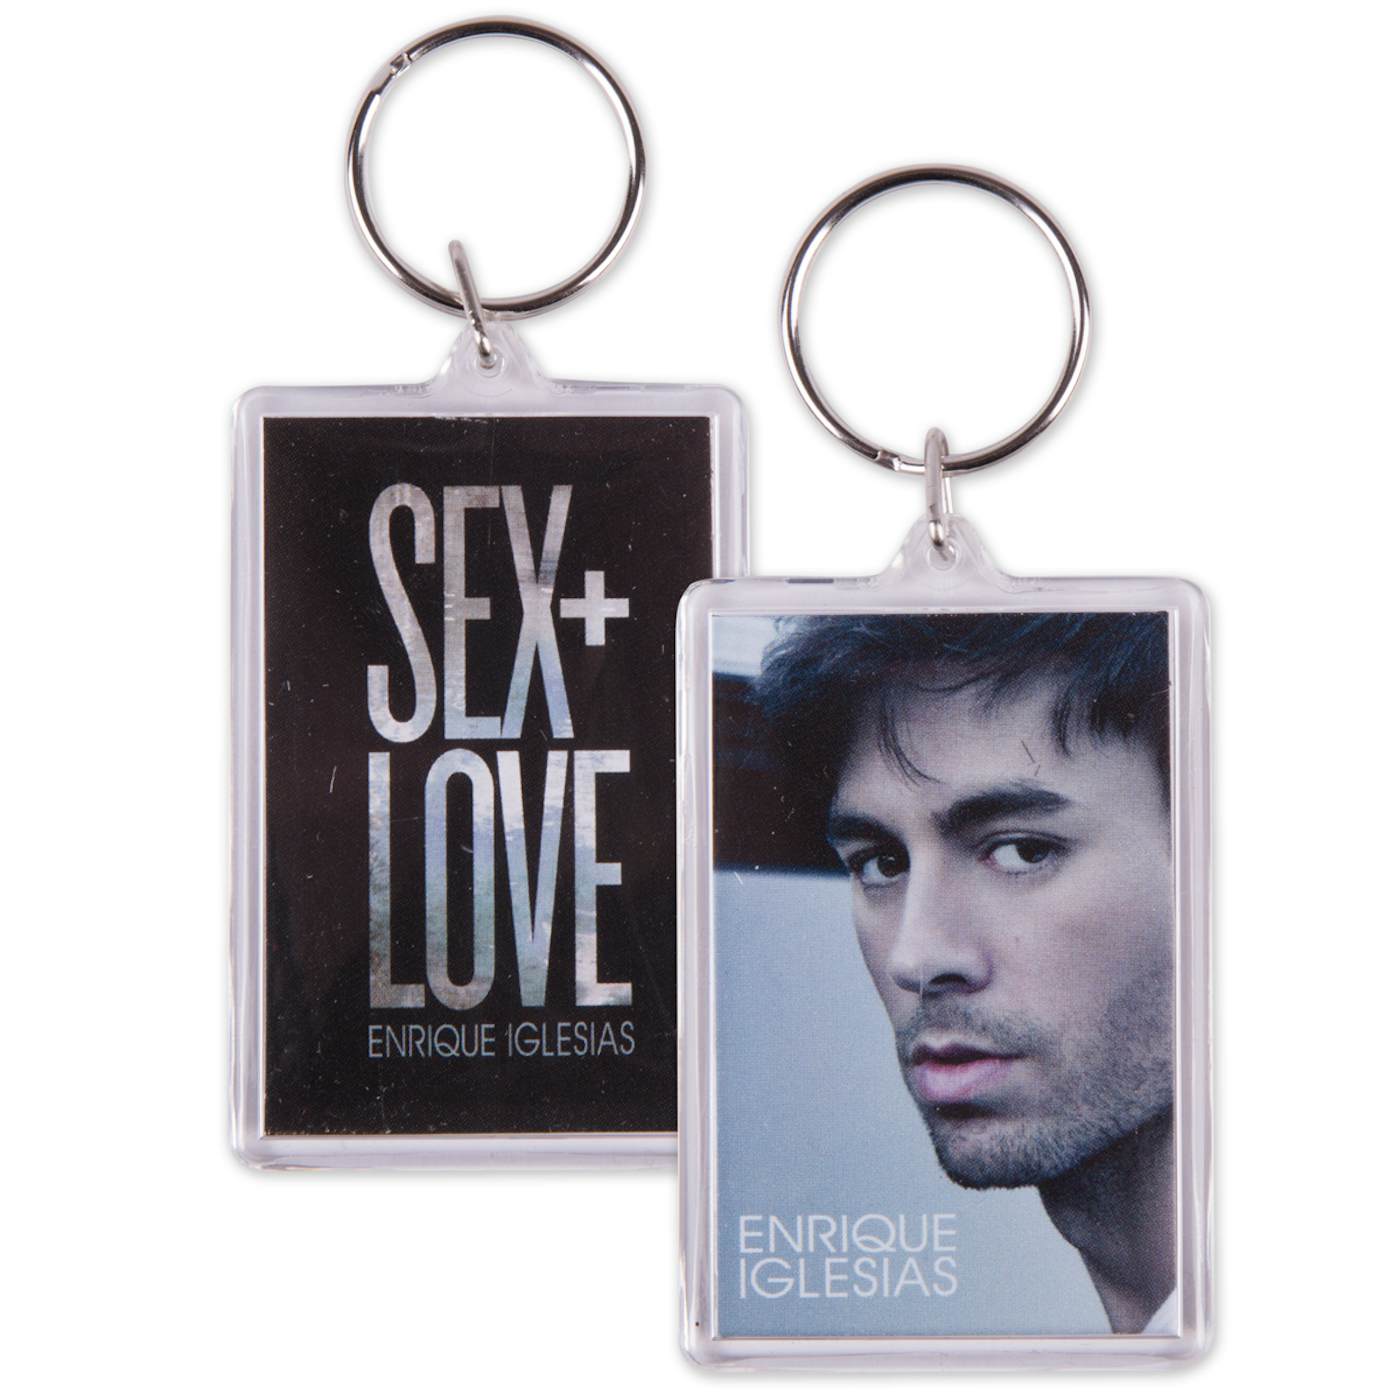 Enrique Iglesias Keychain | Sex+Love Tour